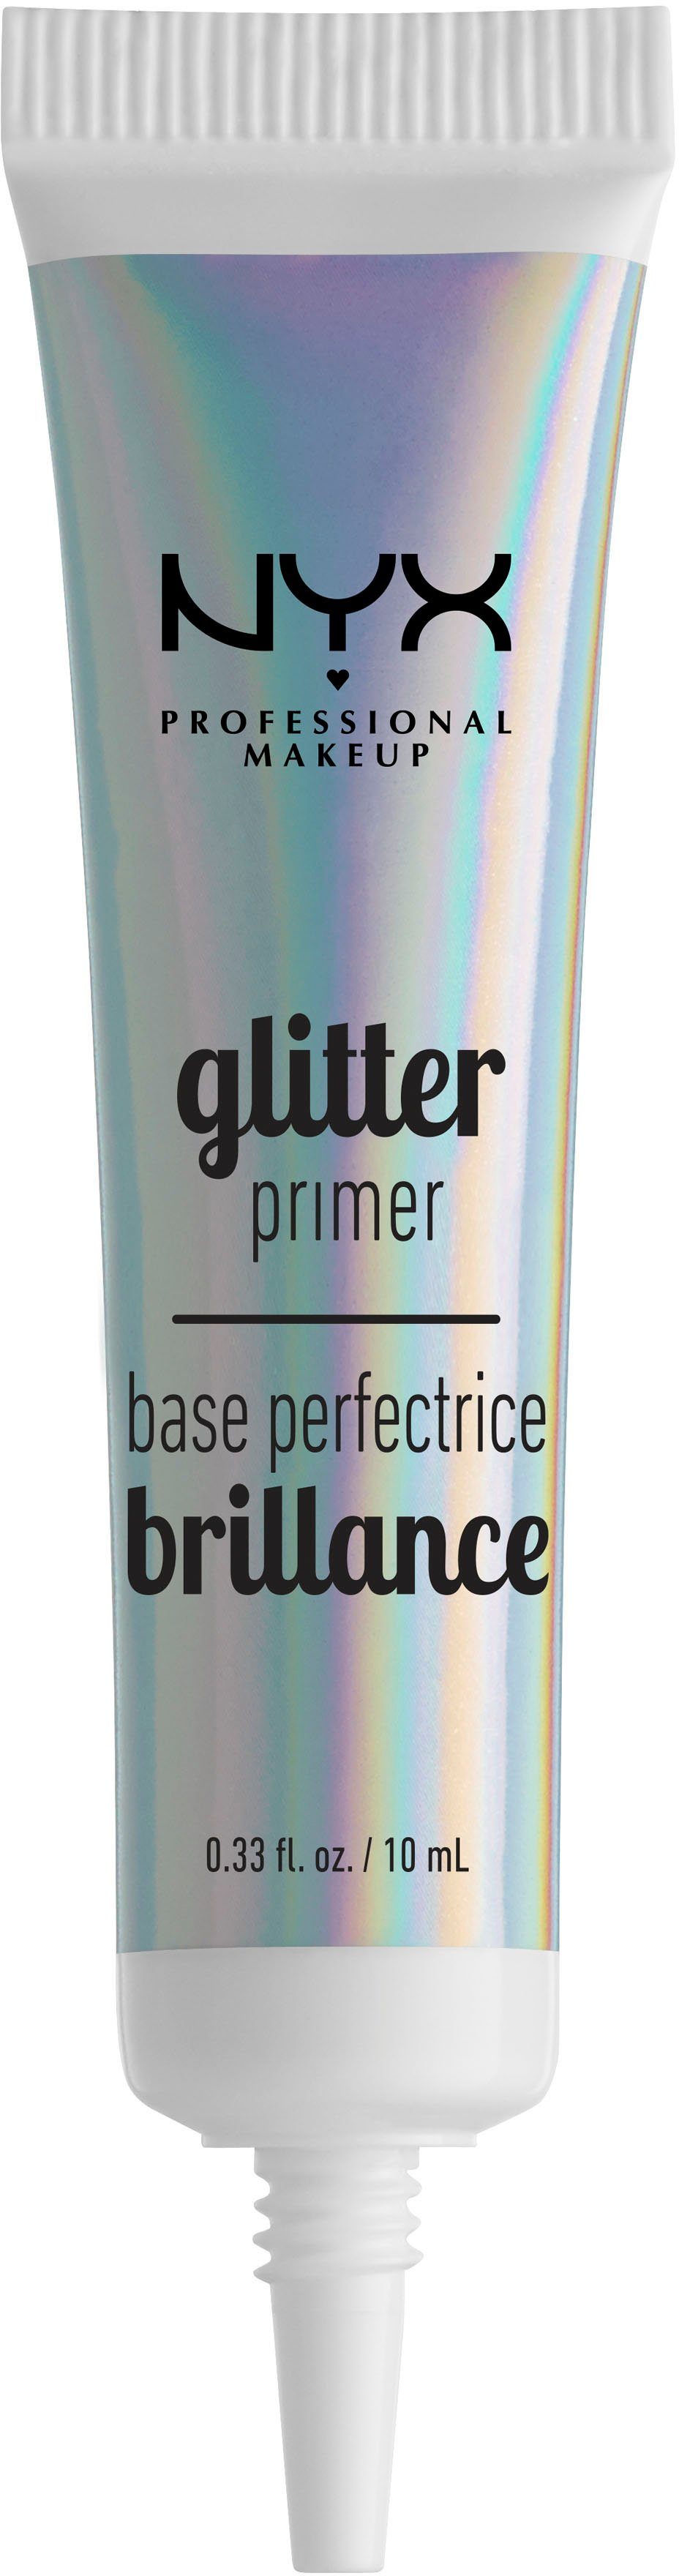 NYX Primer Professional Makeup Glitter Primer NYX